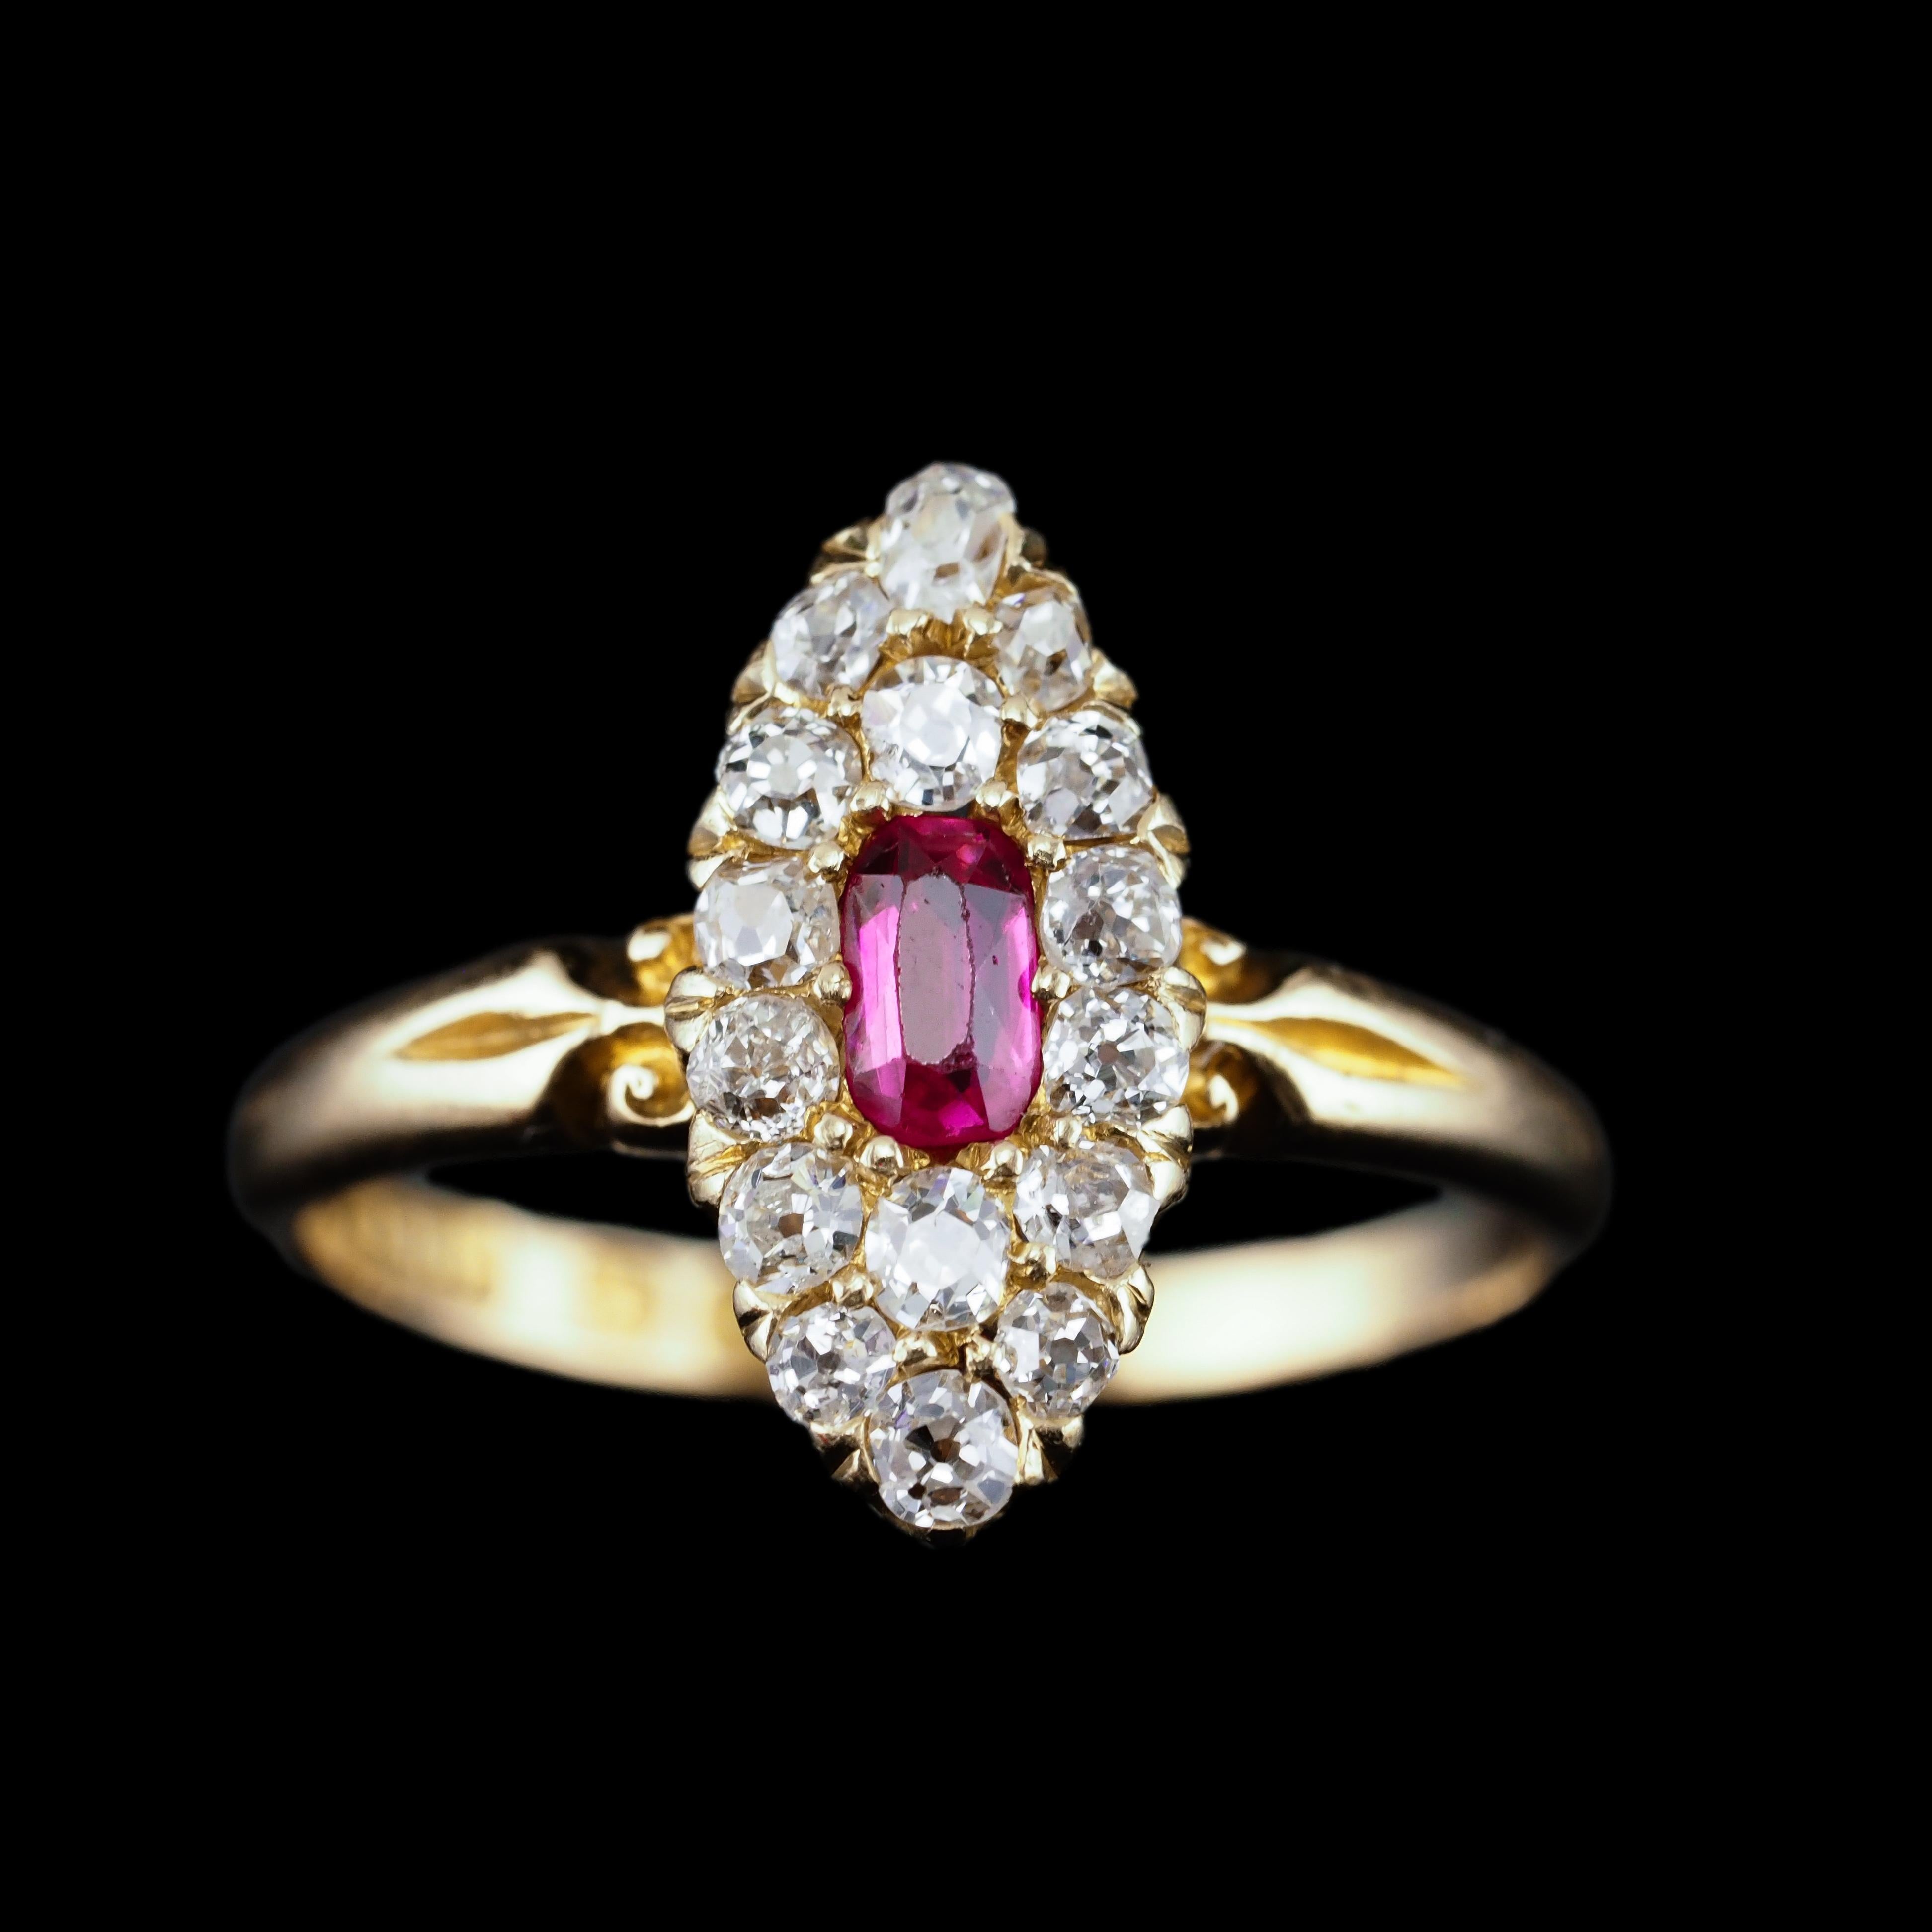 Antique Victorian Ruby & Diamond Ring 18K Gold Cluster Navette Design - 1886 For Sale 5